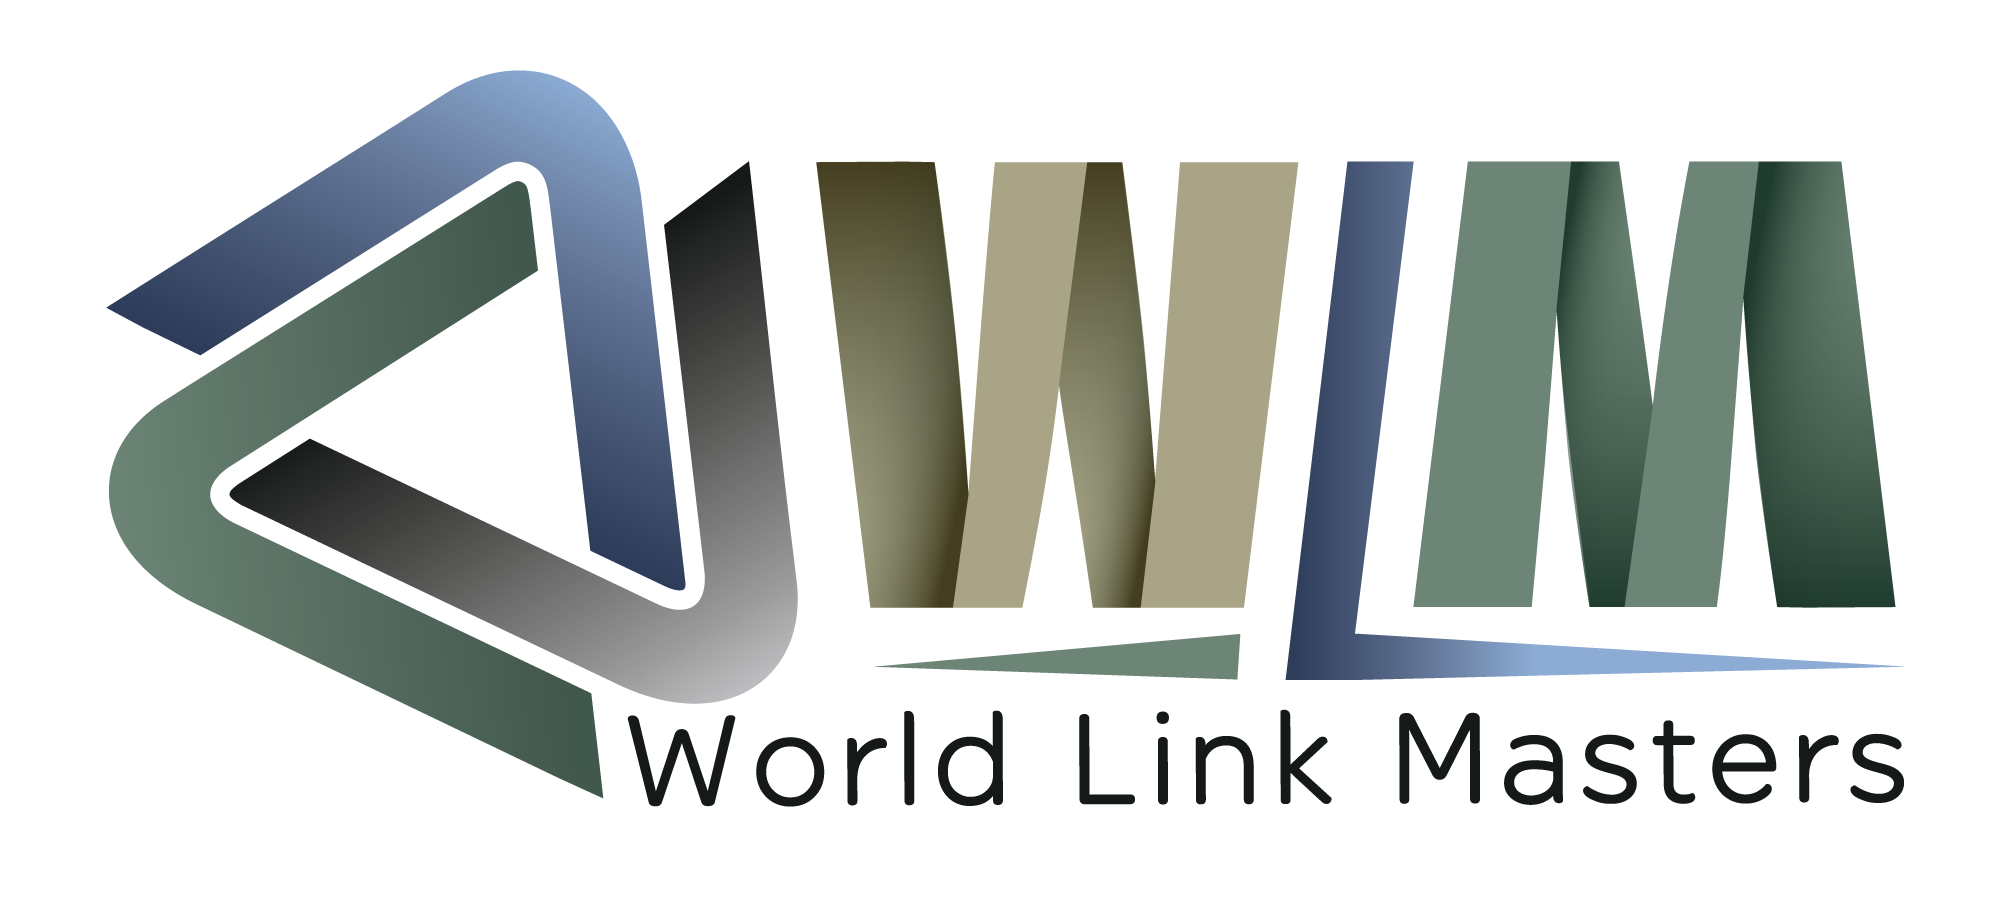 World Links Master